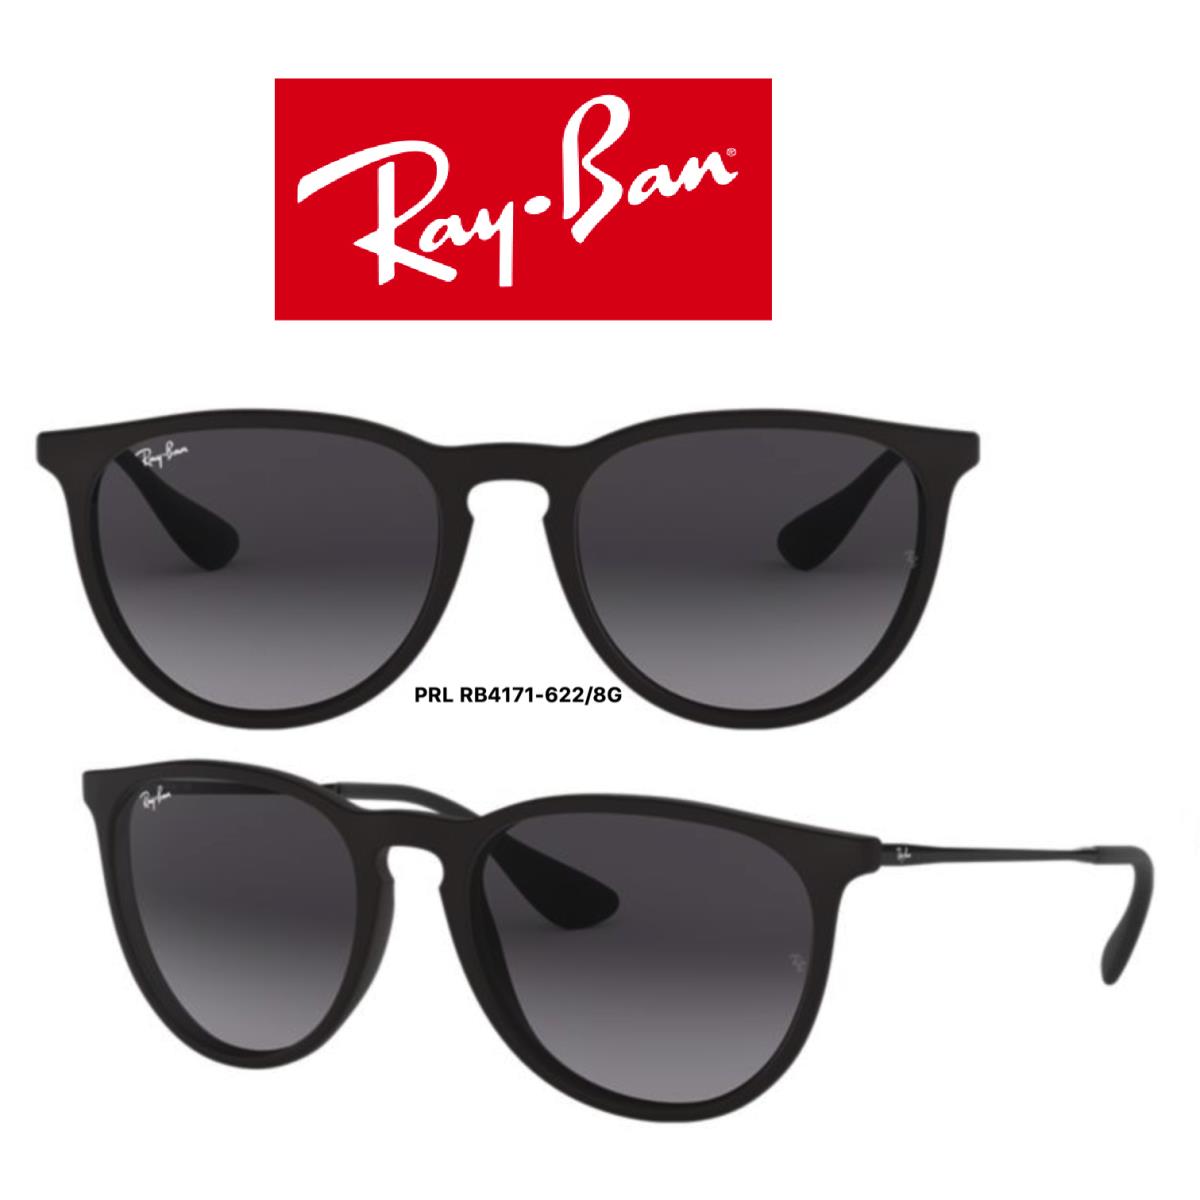 Ray-ban Ray Ban Sunglasses RB4171 Erika - Multiple Colors RB4171 622/8G